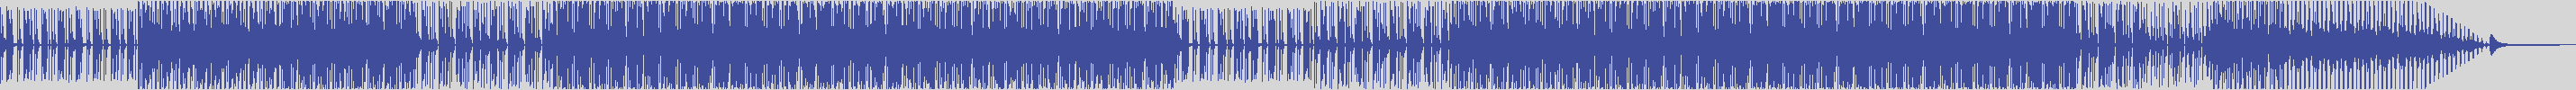 nf_boyz_records [NFY056] Mr. Tadashi - Littled [Tribal Edit] audio wave form